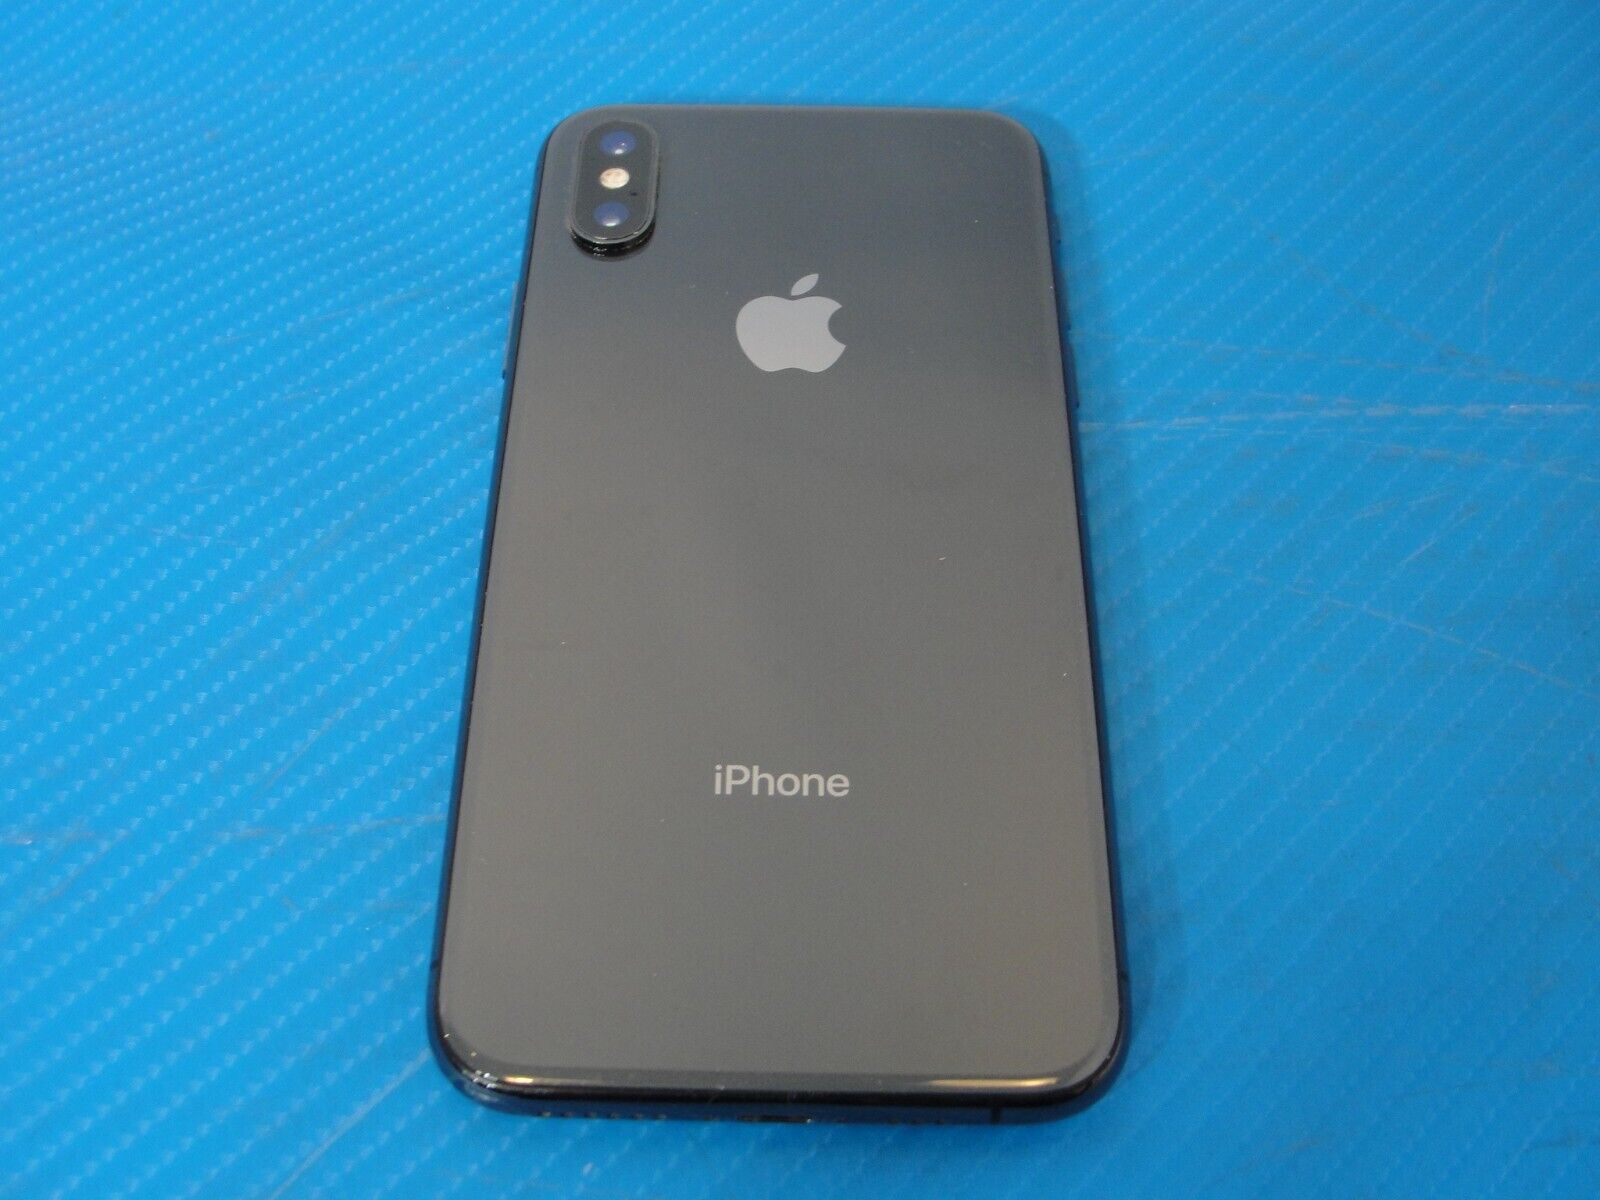 Apple iPhone XS 256GB Space Gray AT&T MT8X2LL/A No cracks, no scratches